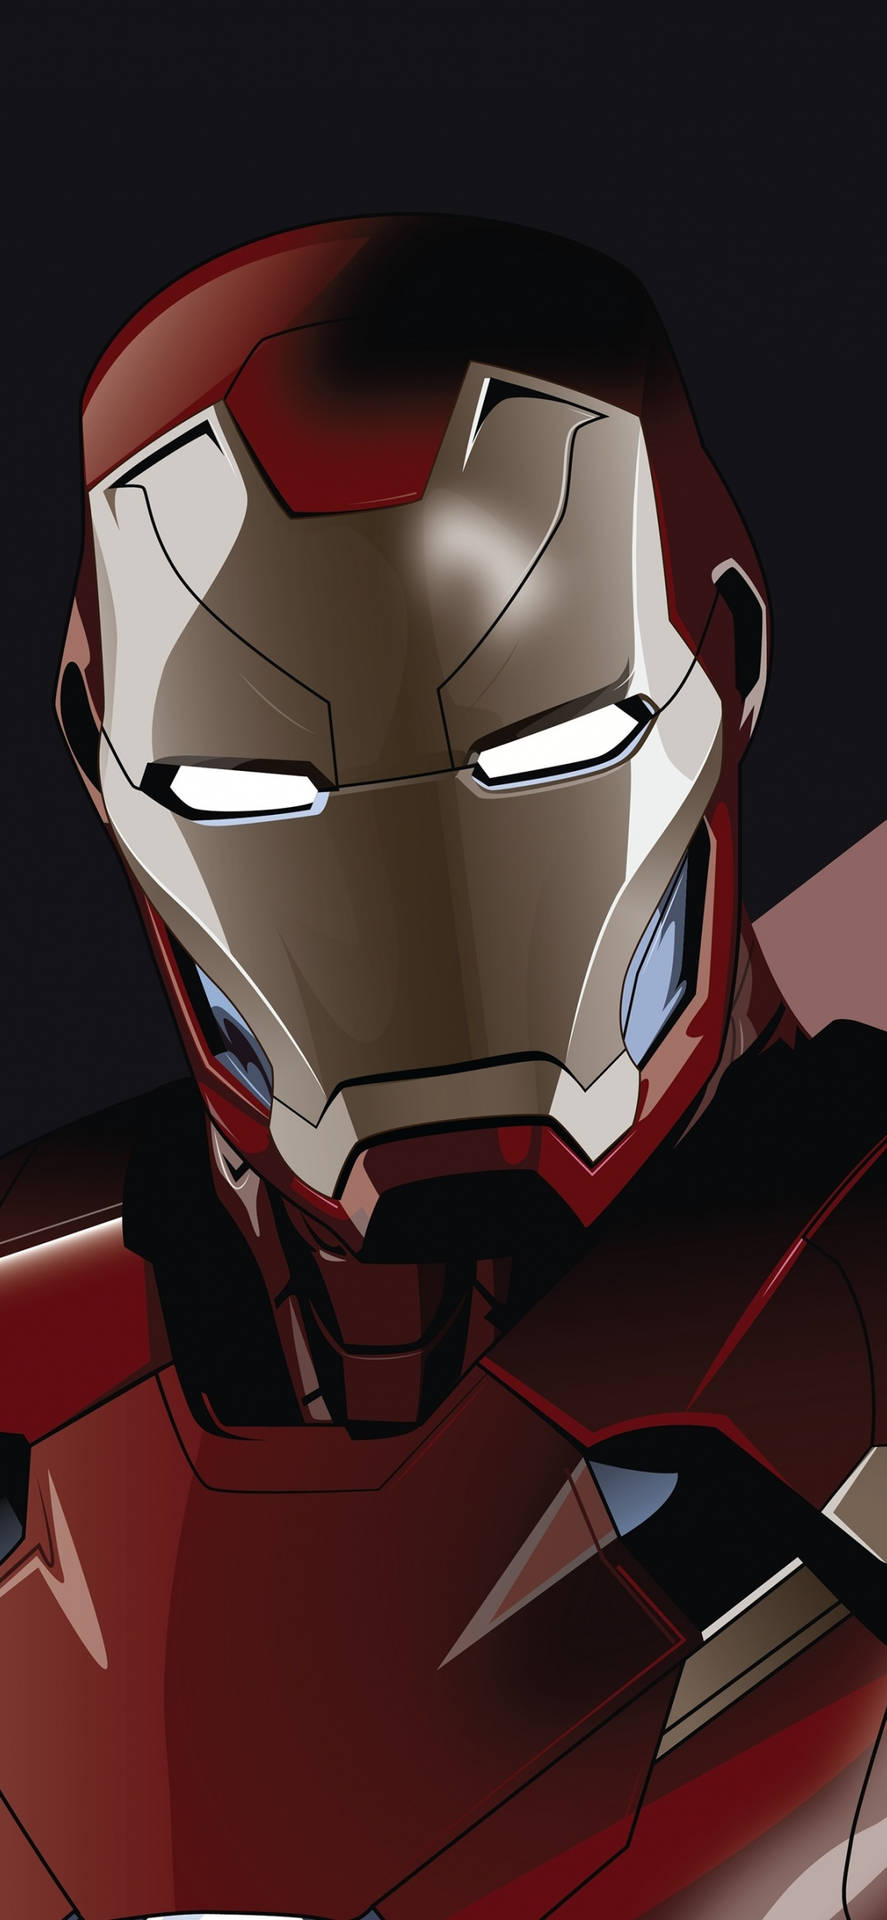 Download Animated Minimalist Iron Man Superhero Wallpaper 